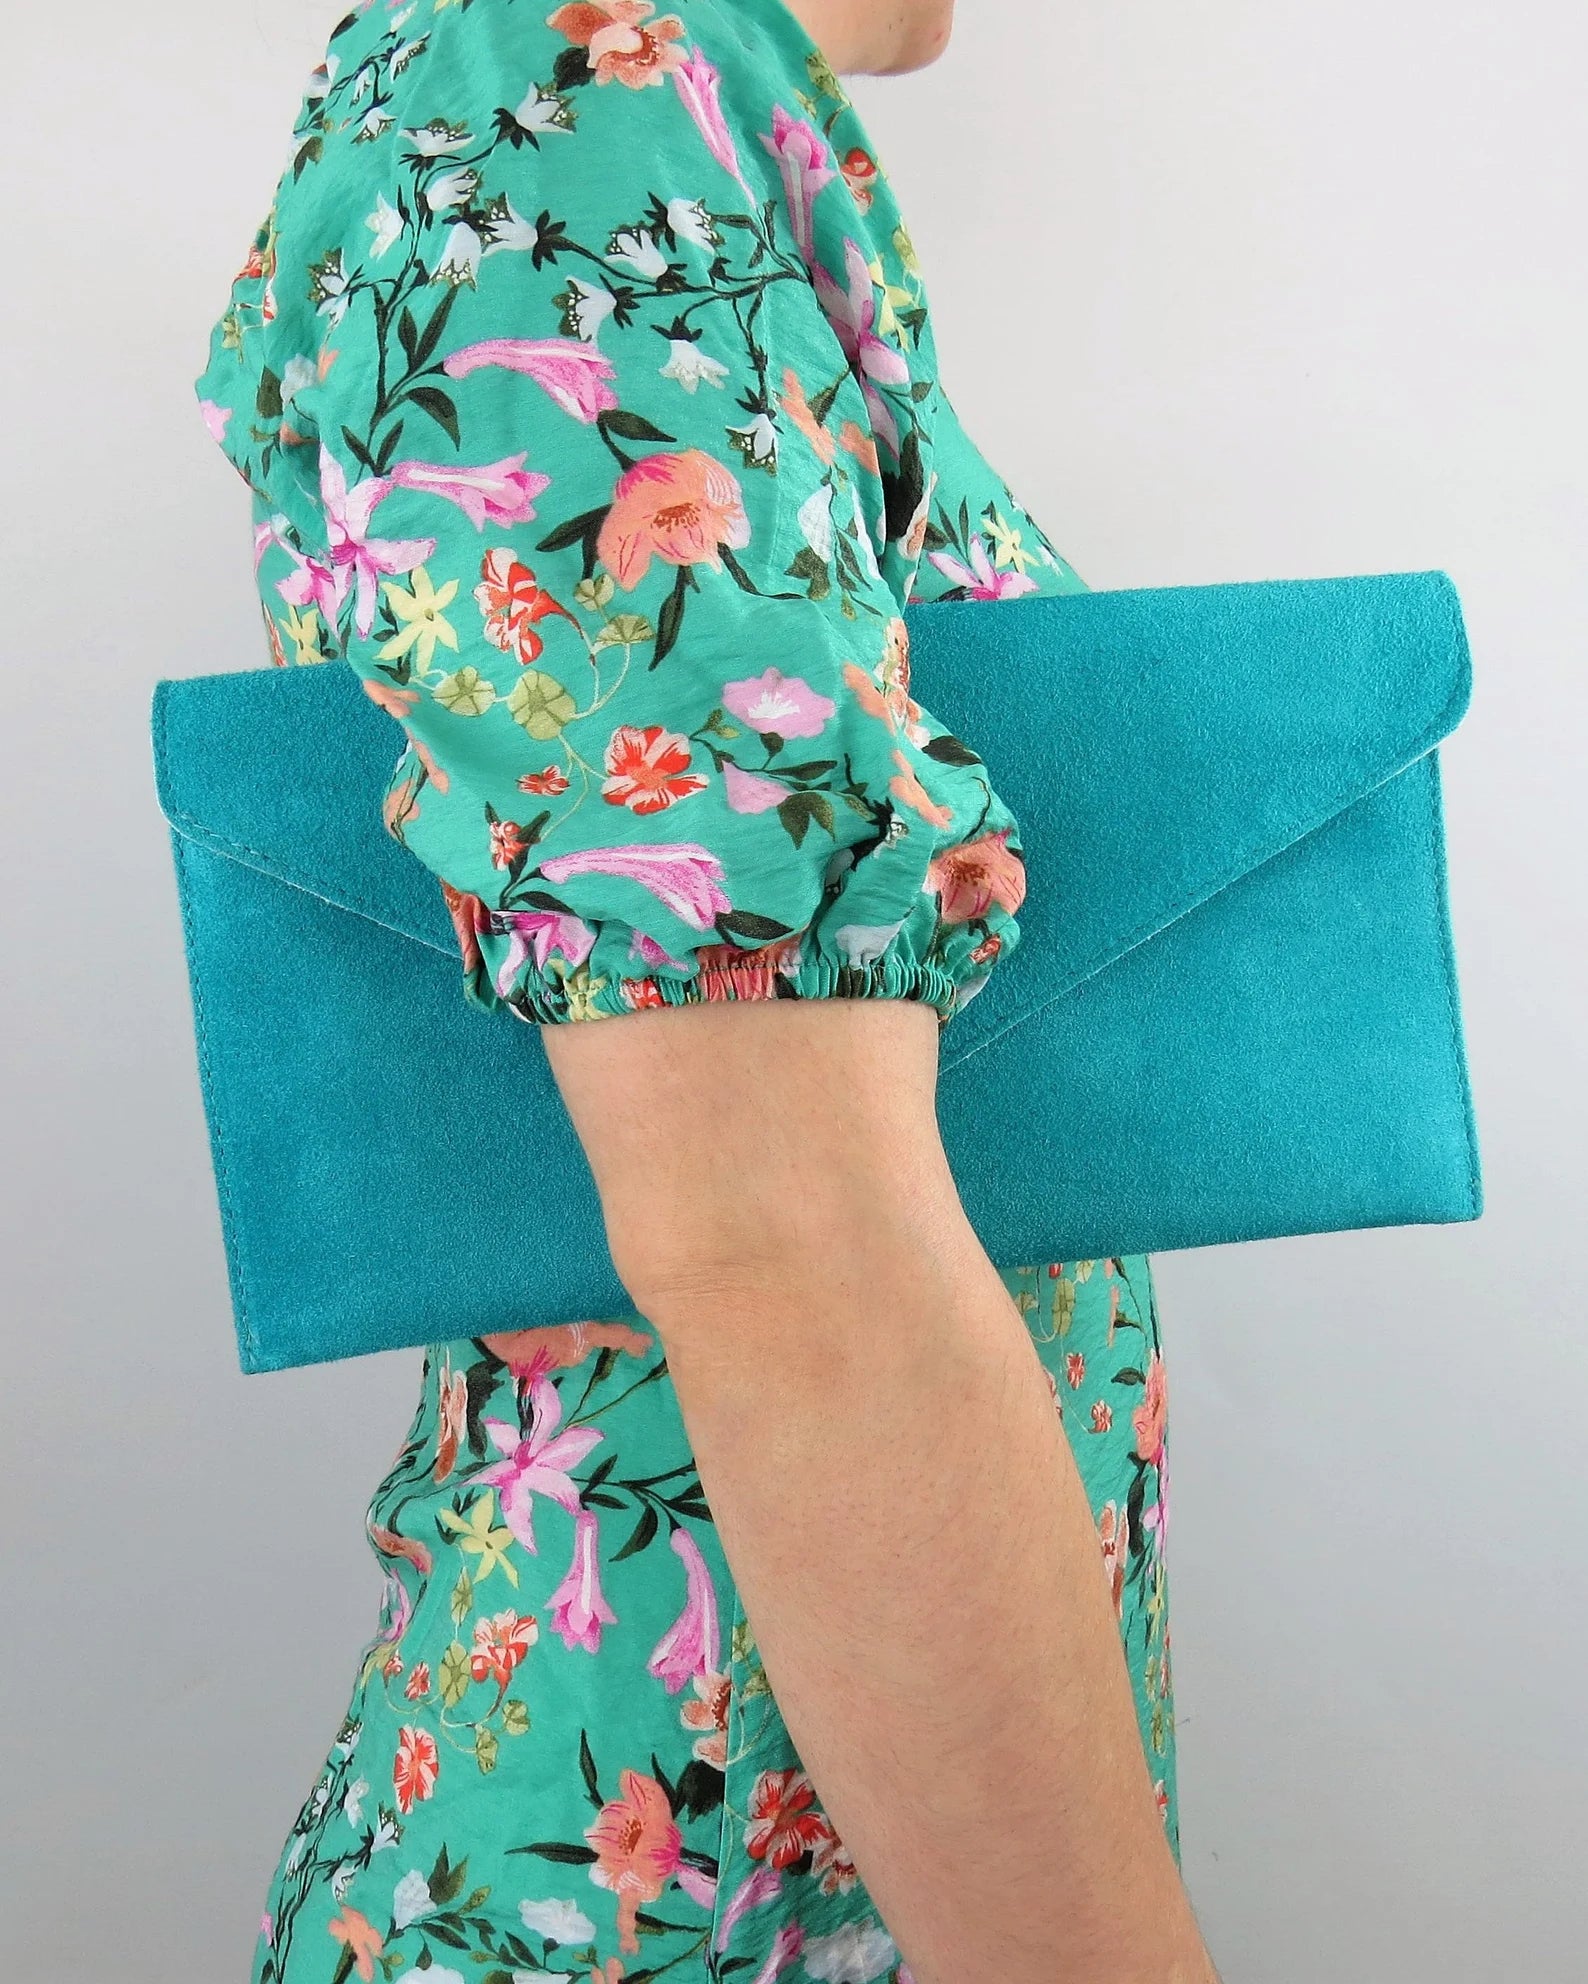 Turquoise Envelope Clutch Bag